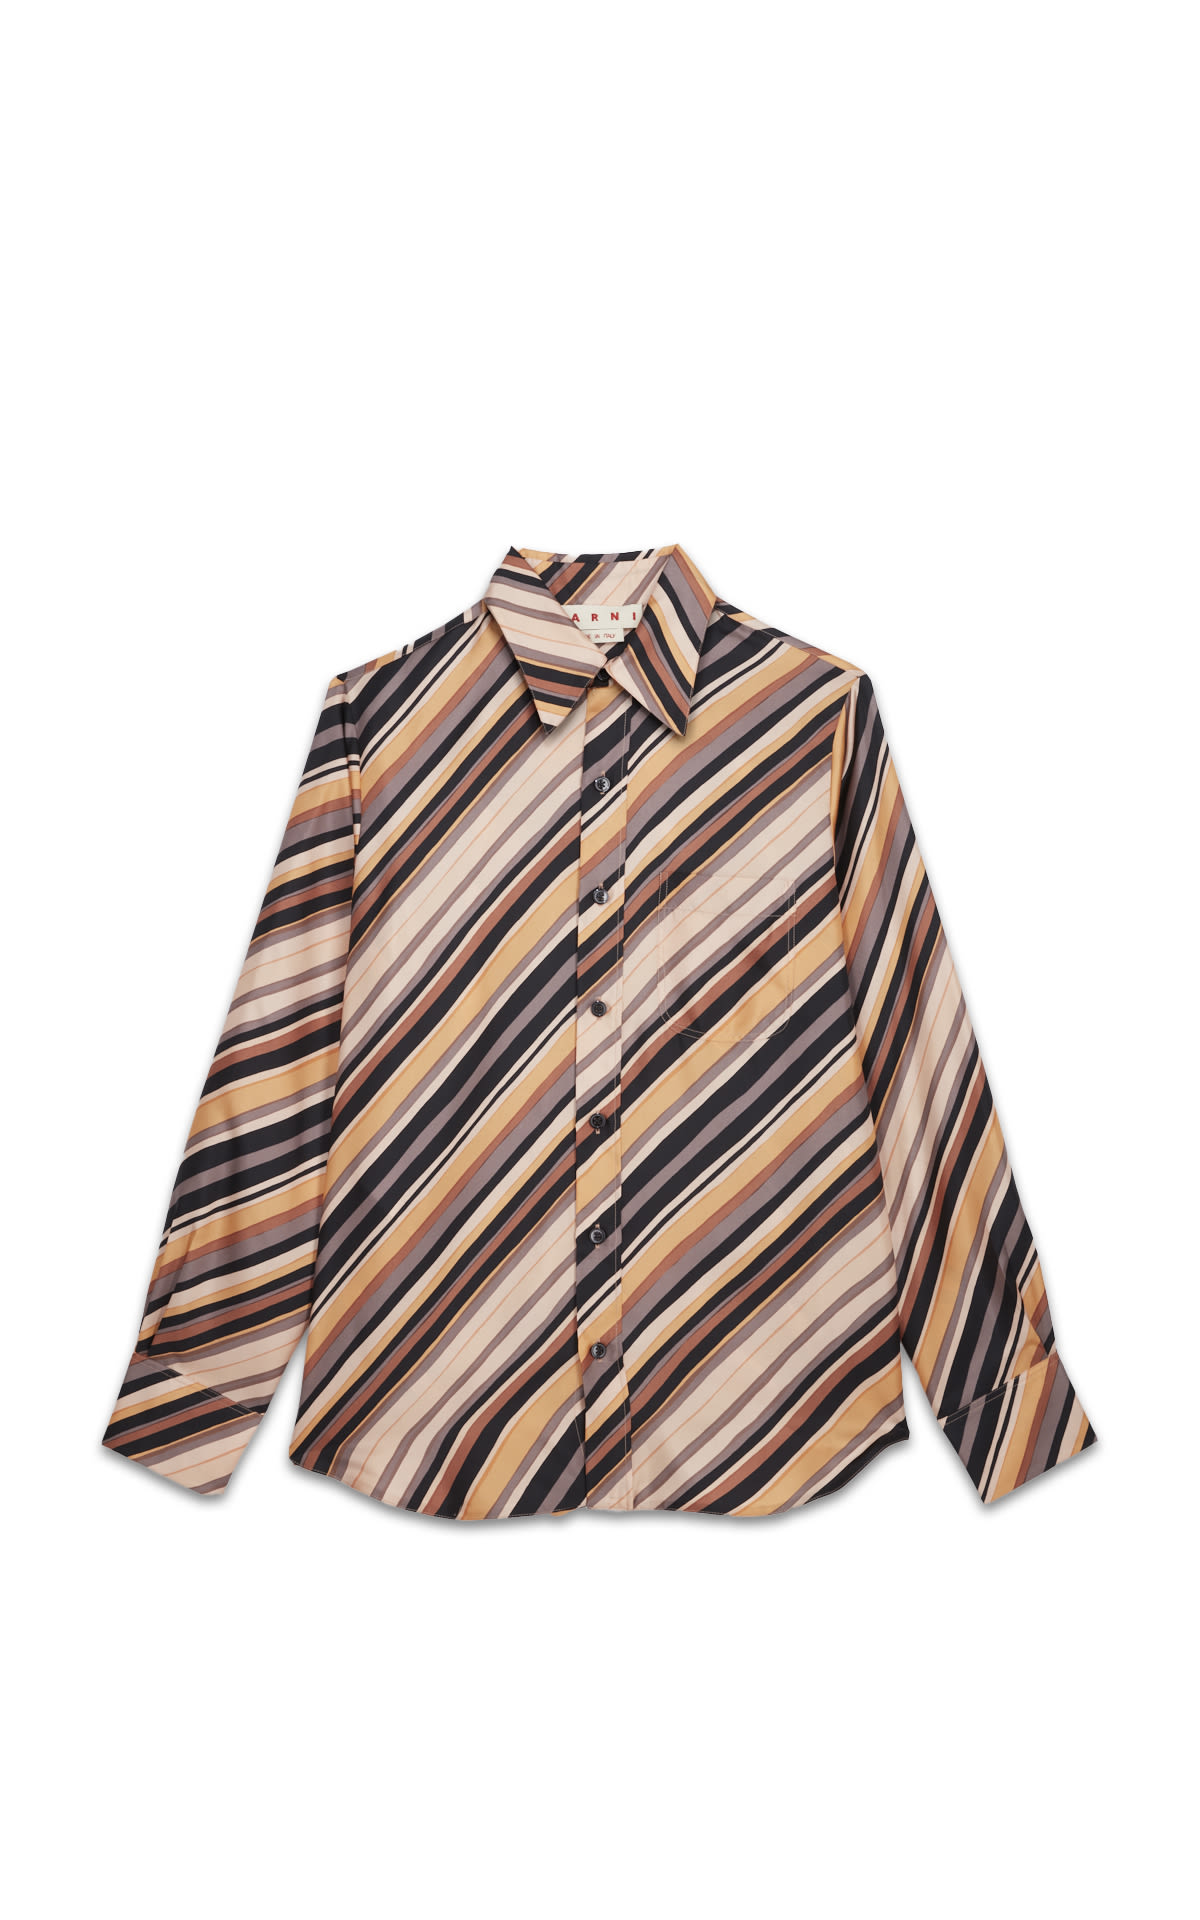 100% striped silk shirt*